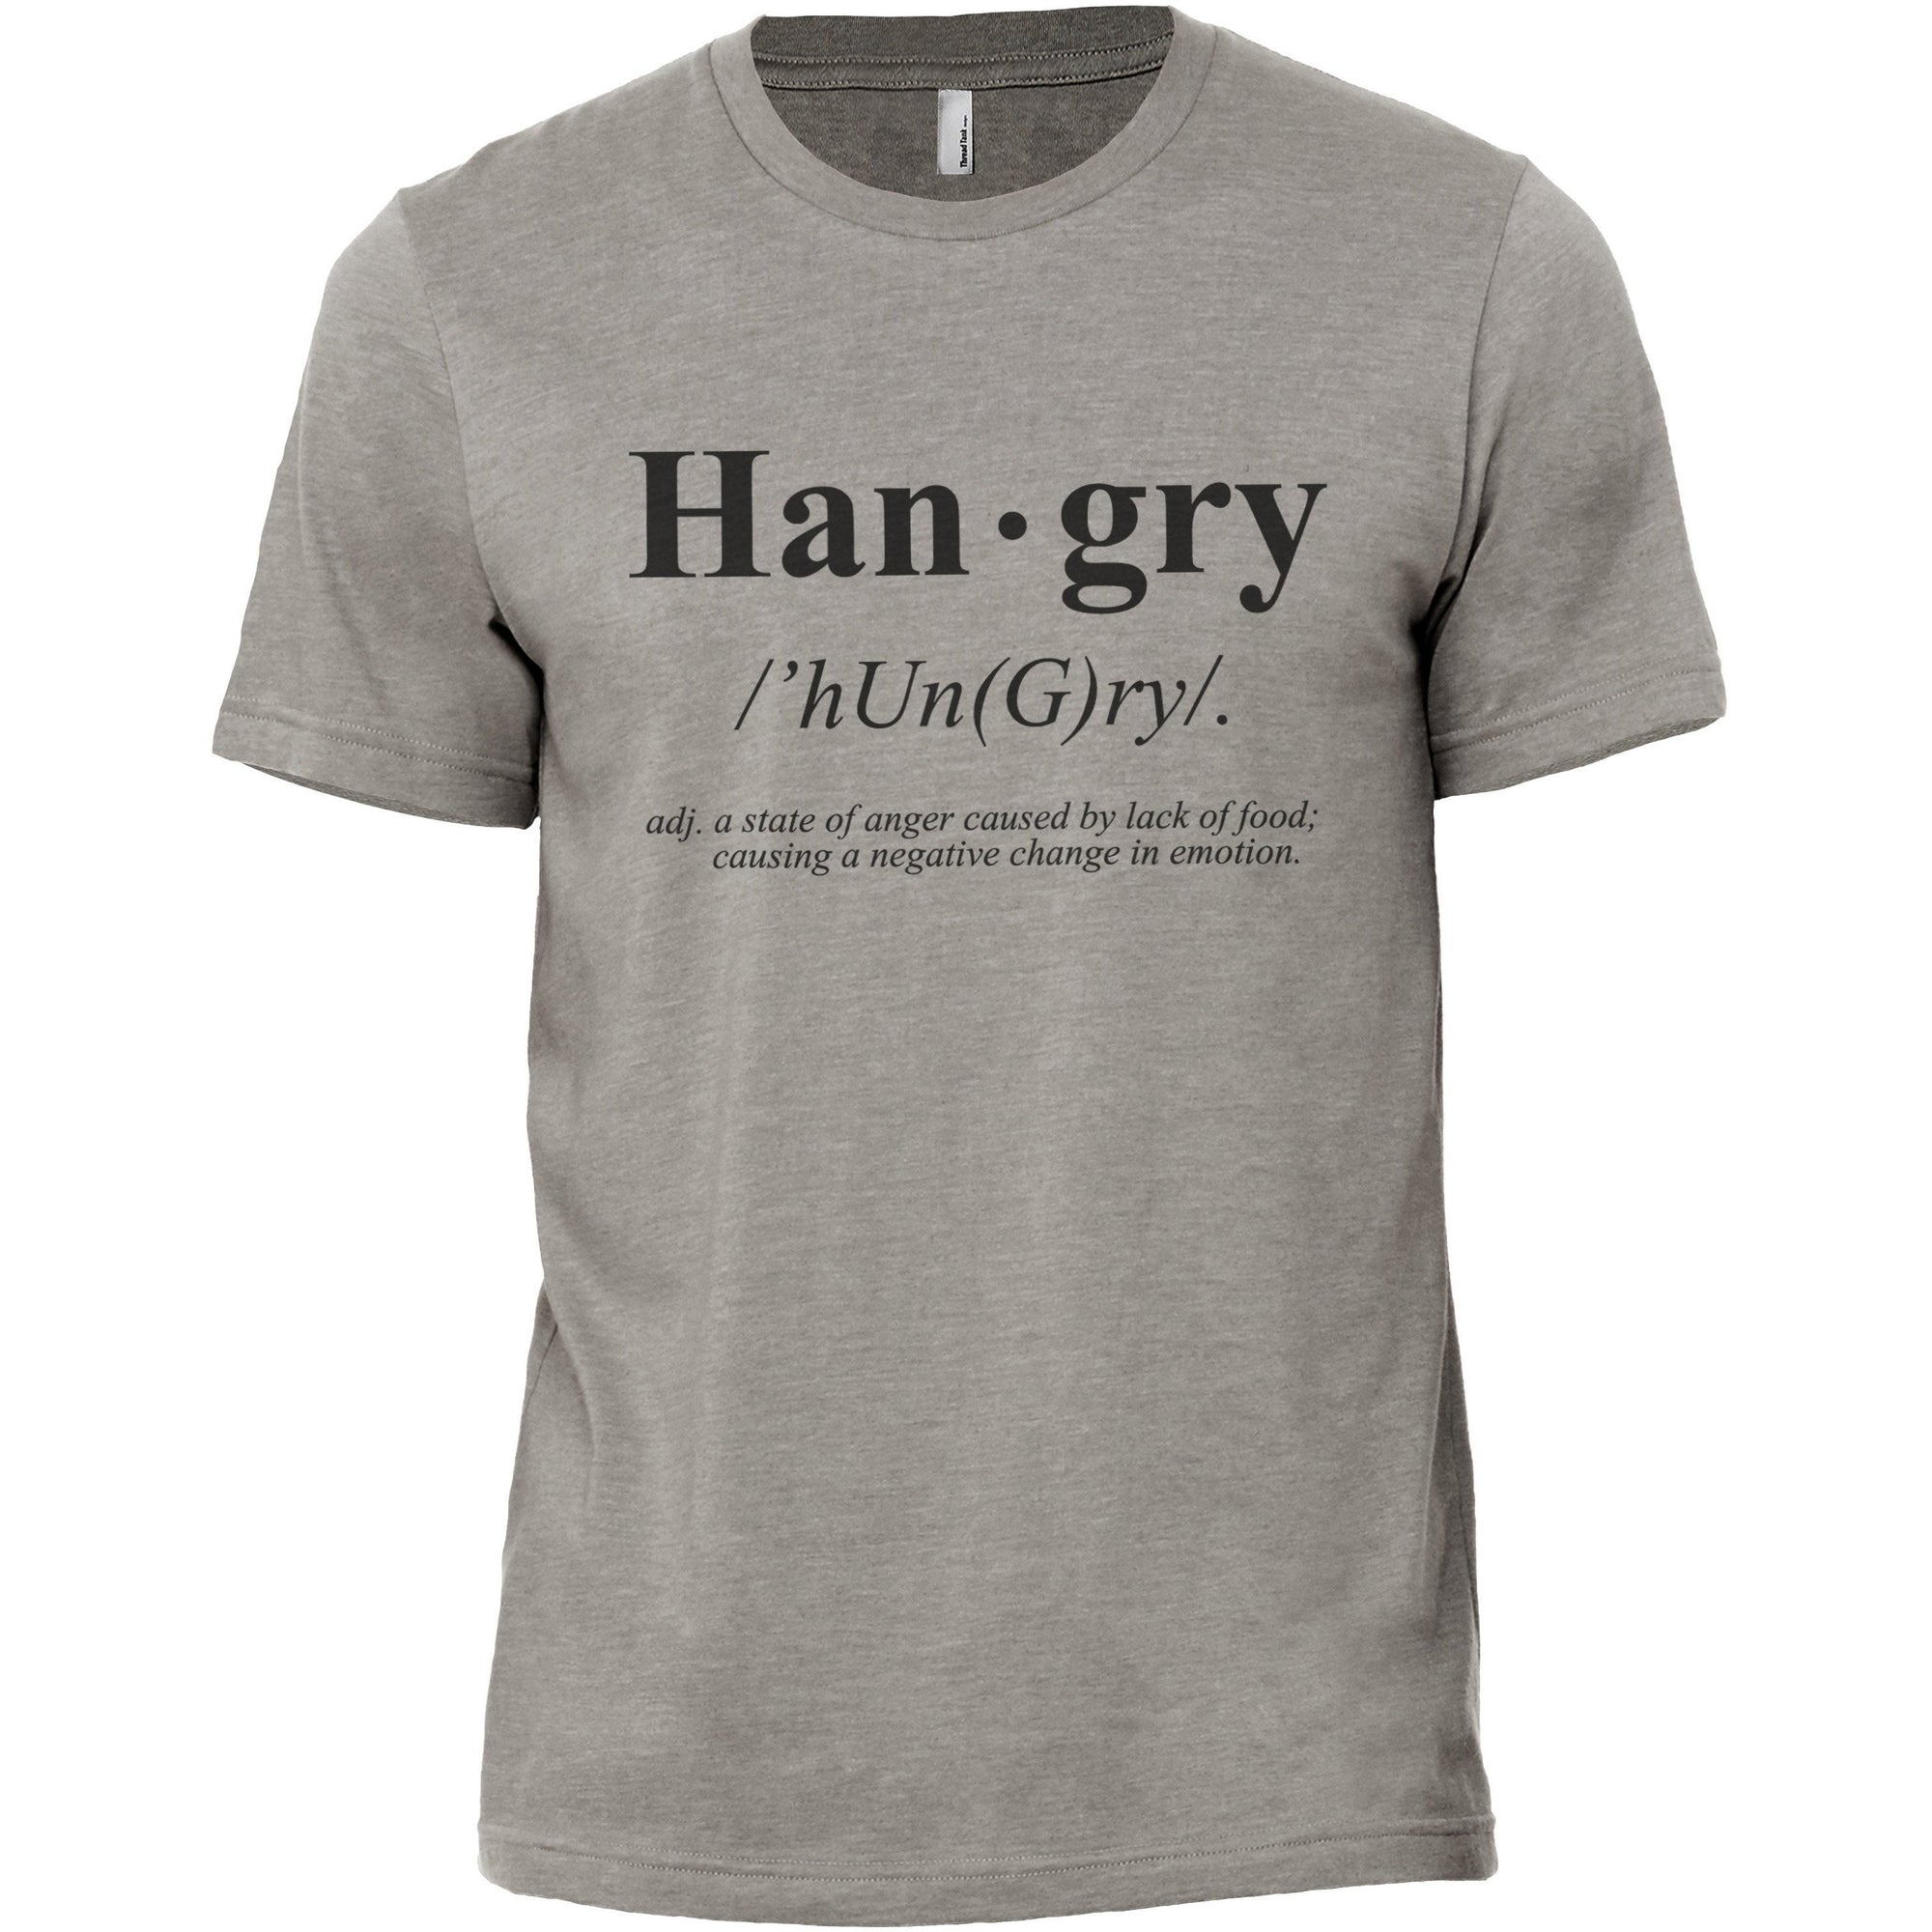 HanGry Military Grey Printed Graphic Men's Crew T-Shirt Tee